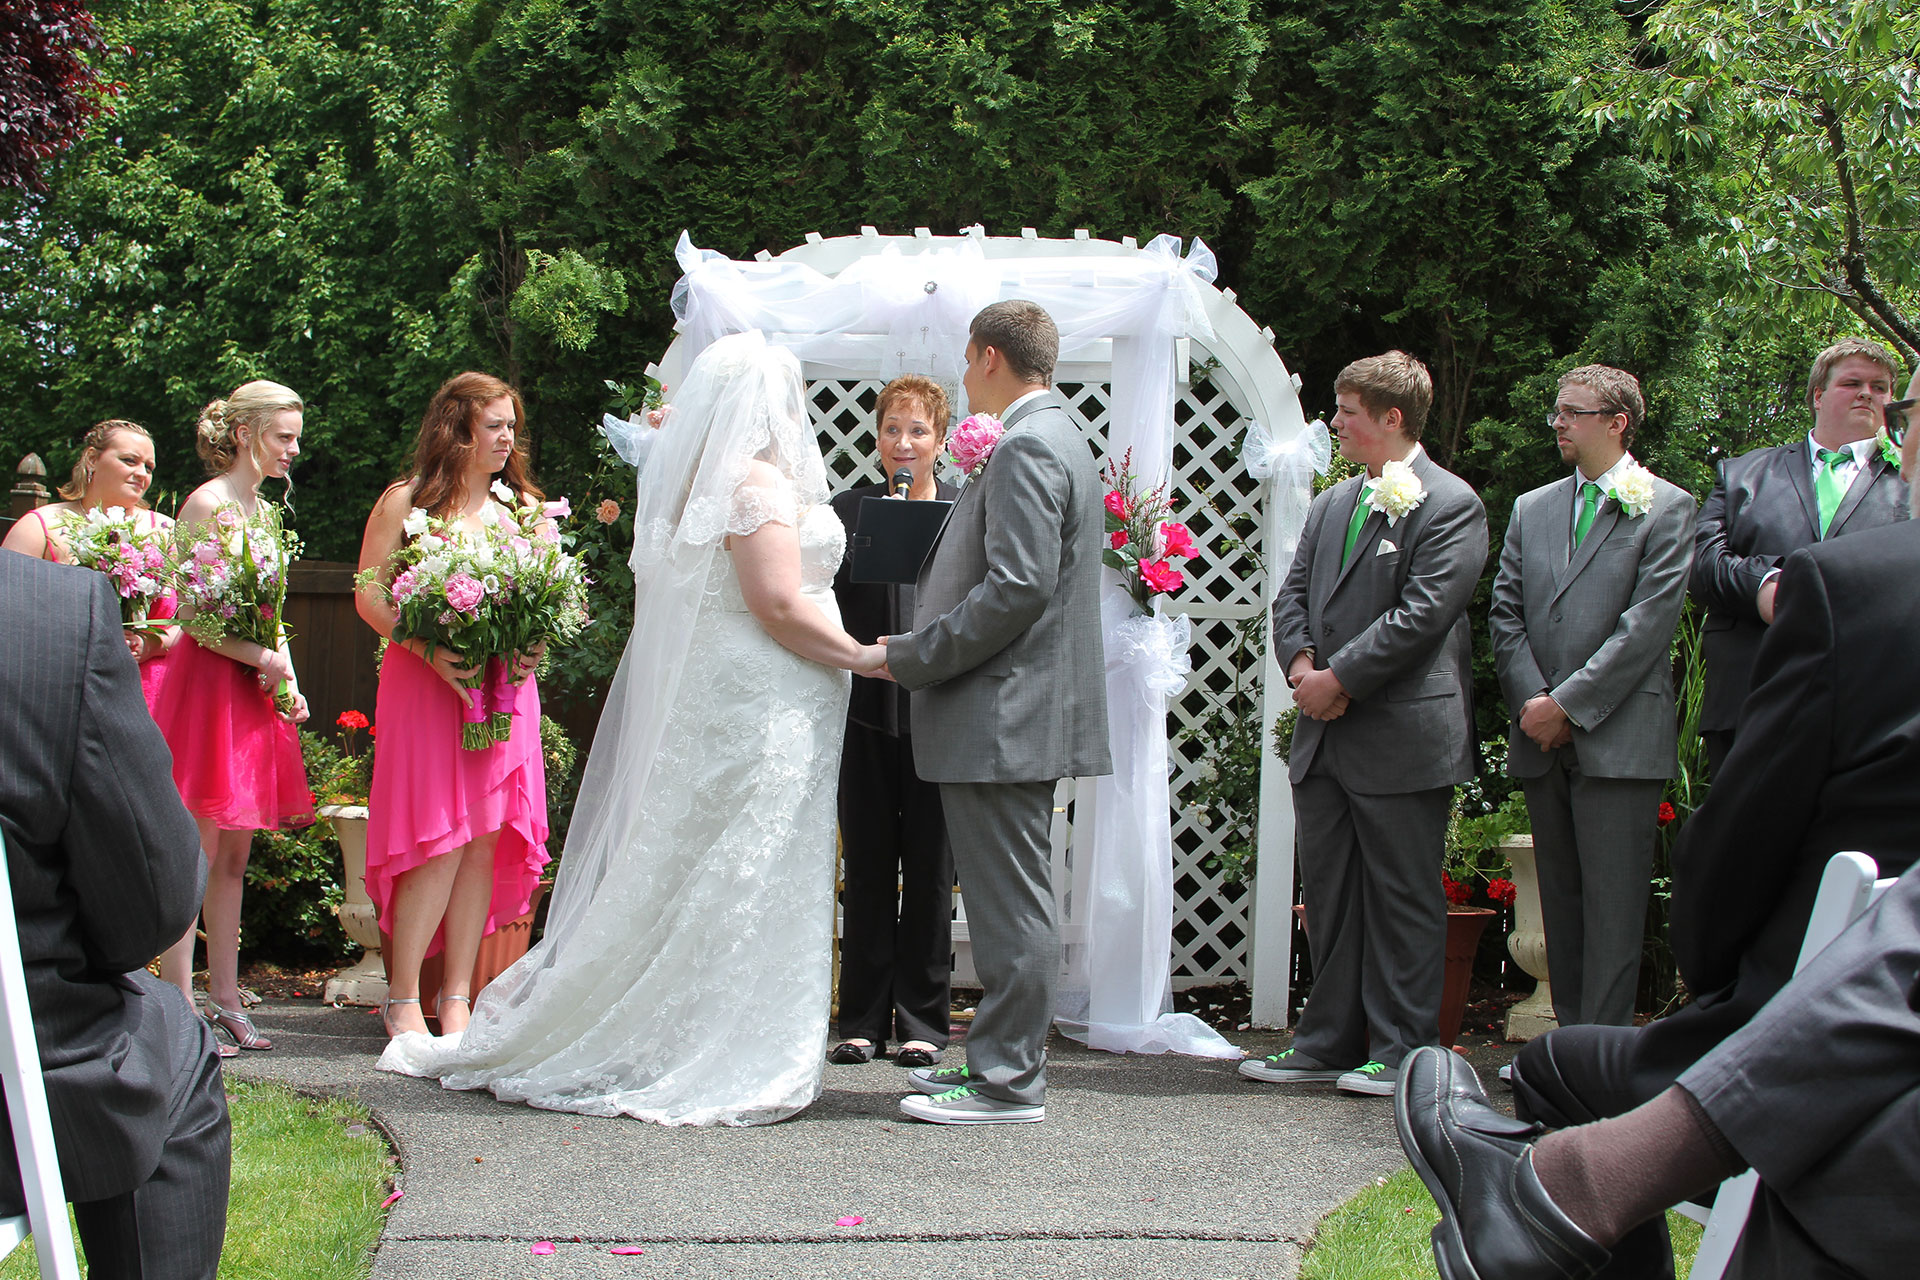 Seattle Wedding Officiants | Forever, Together